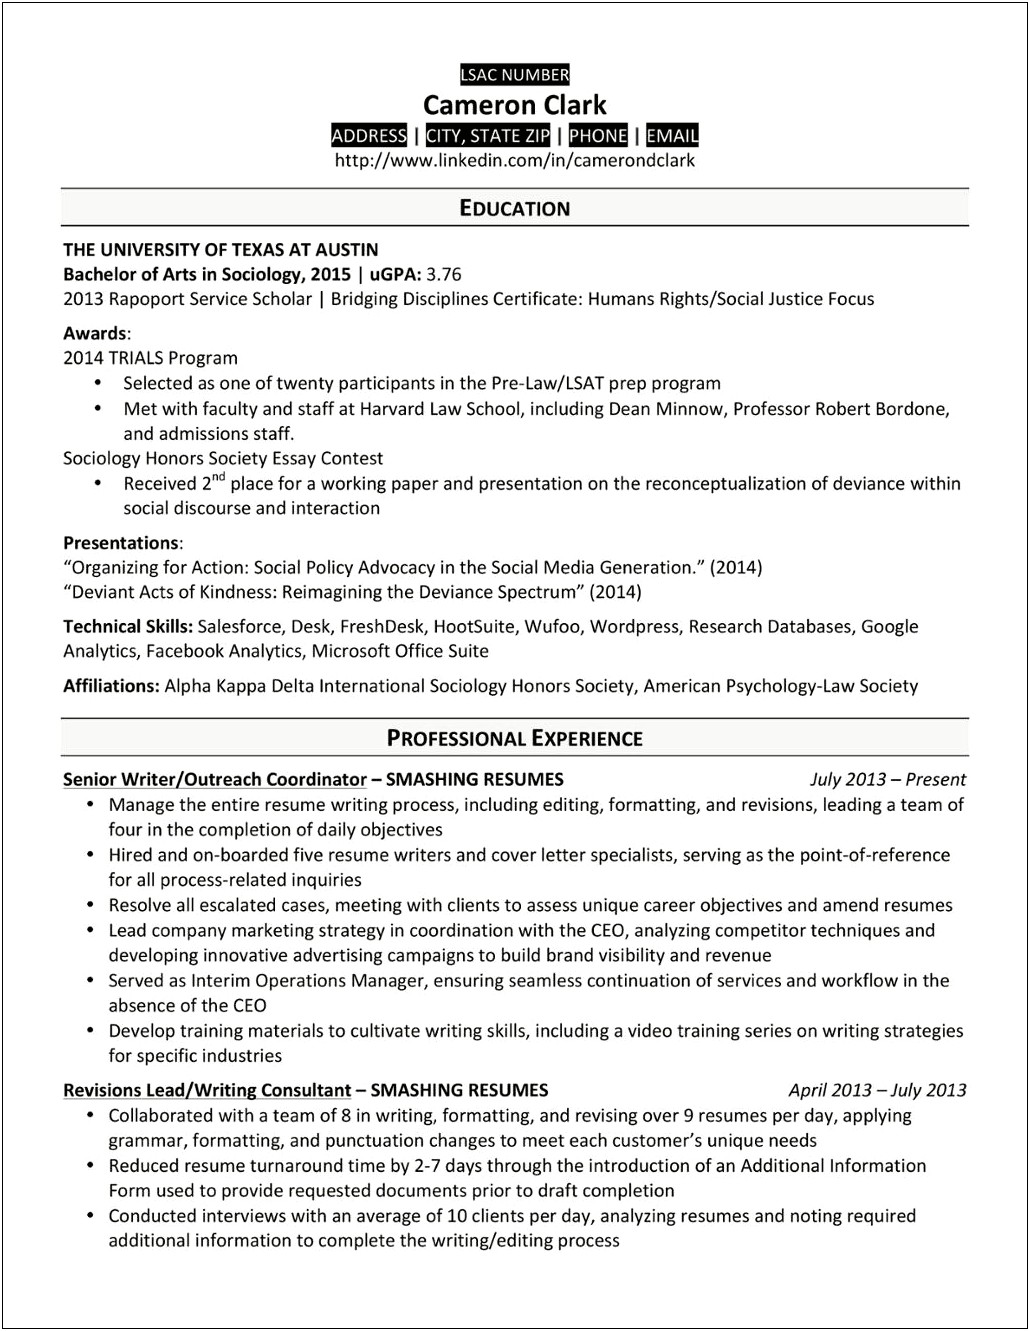 Sample Resume For Law Graduate